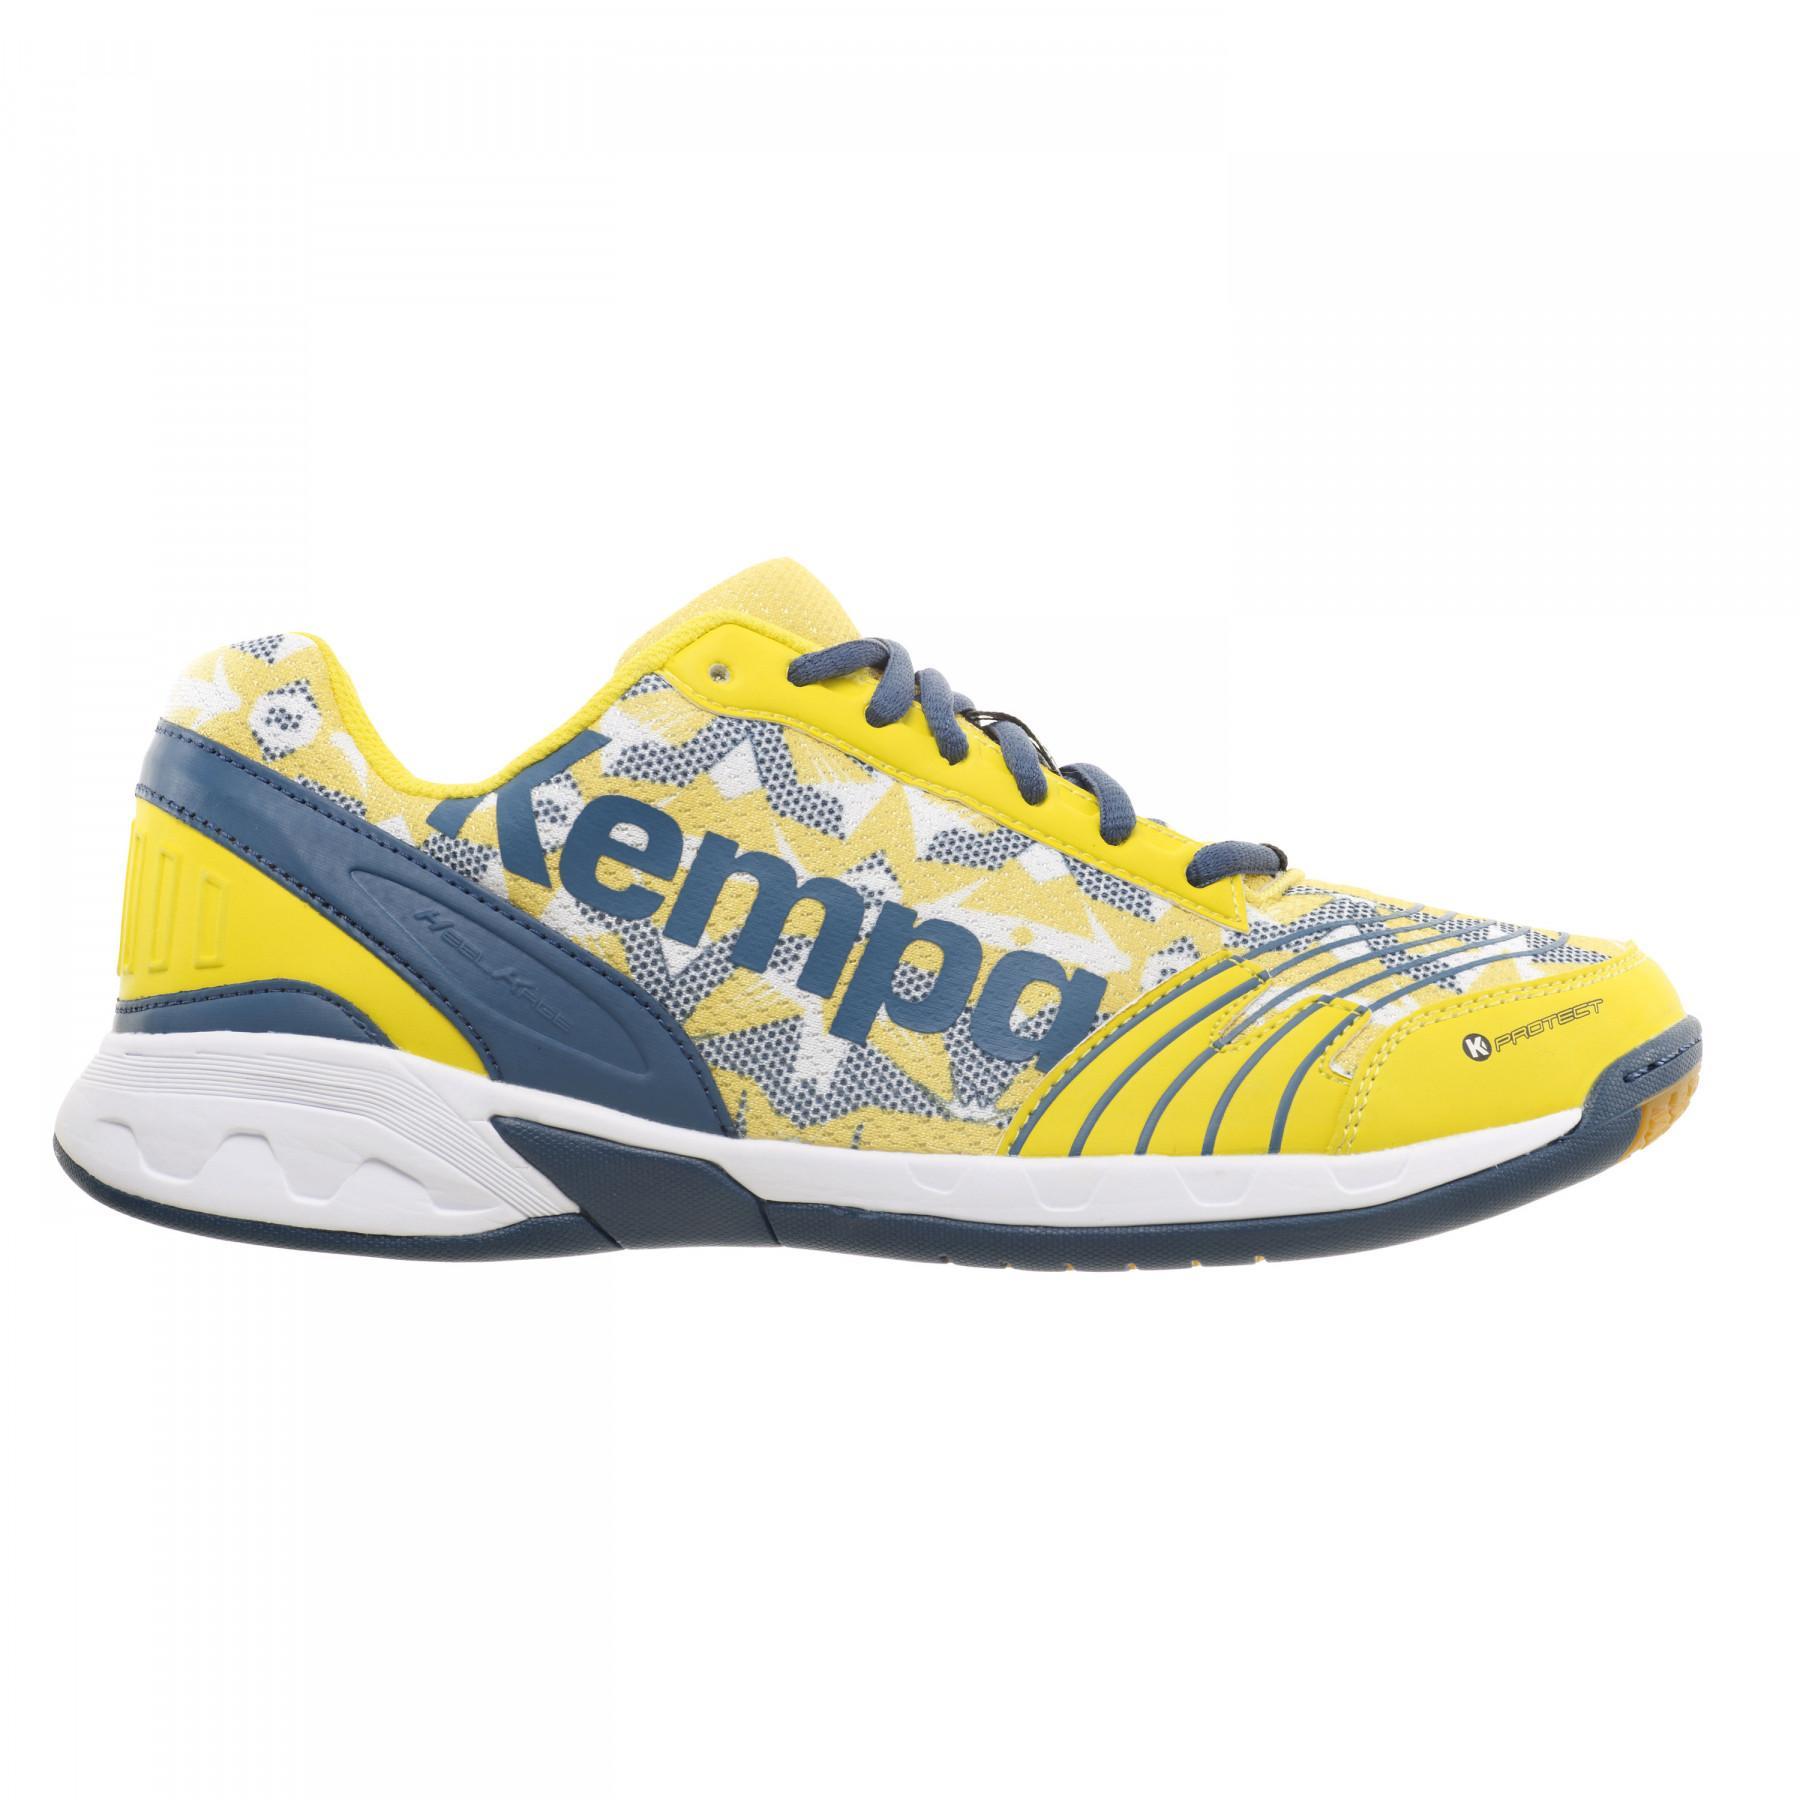 Sapatos Kempa Attack Three bleu roi/blanc/jaune